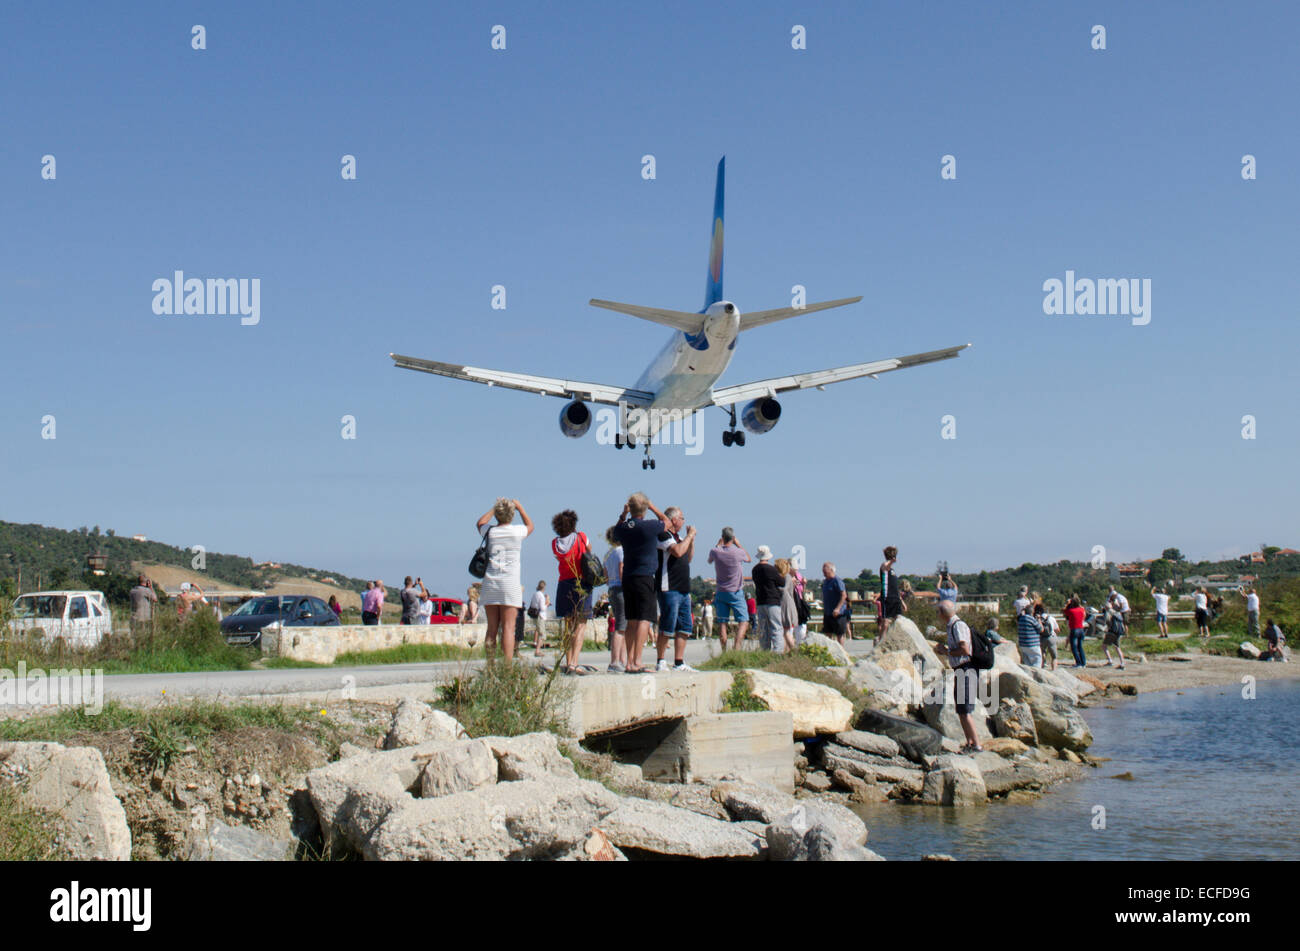 Plane landing on the runway at Skiathos airport. Sliathos. Greece. Planespotters. Stock Photo